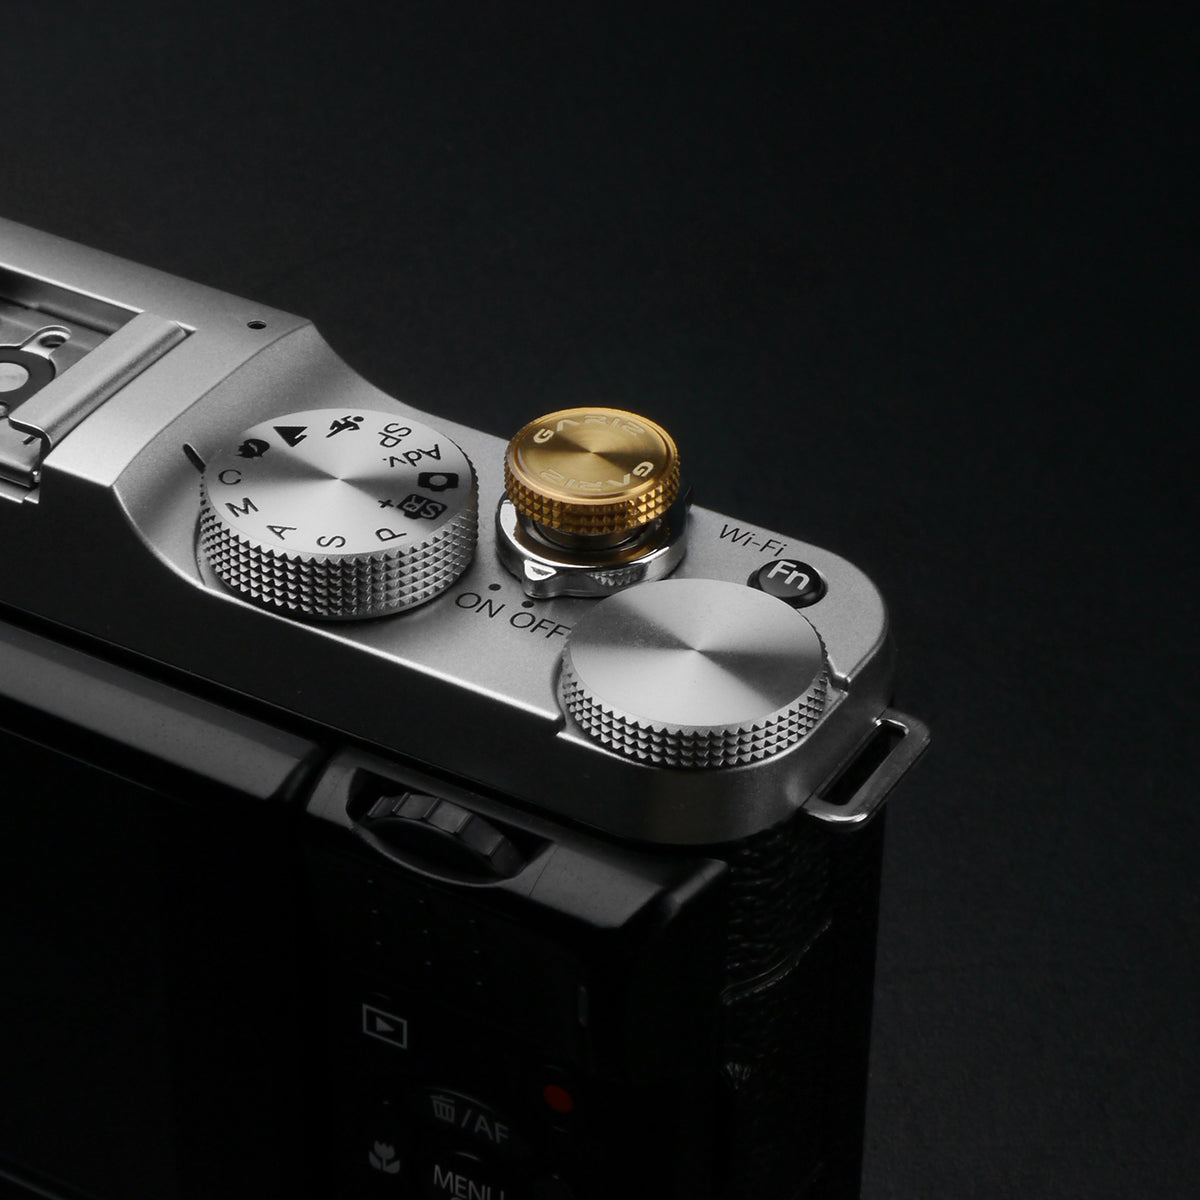 Gariz Sticker type Soft Shutter Button Gold XA-SB6 for Sony Fuji Canon Nikon